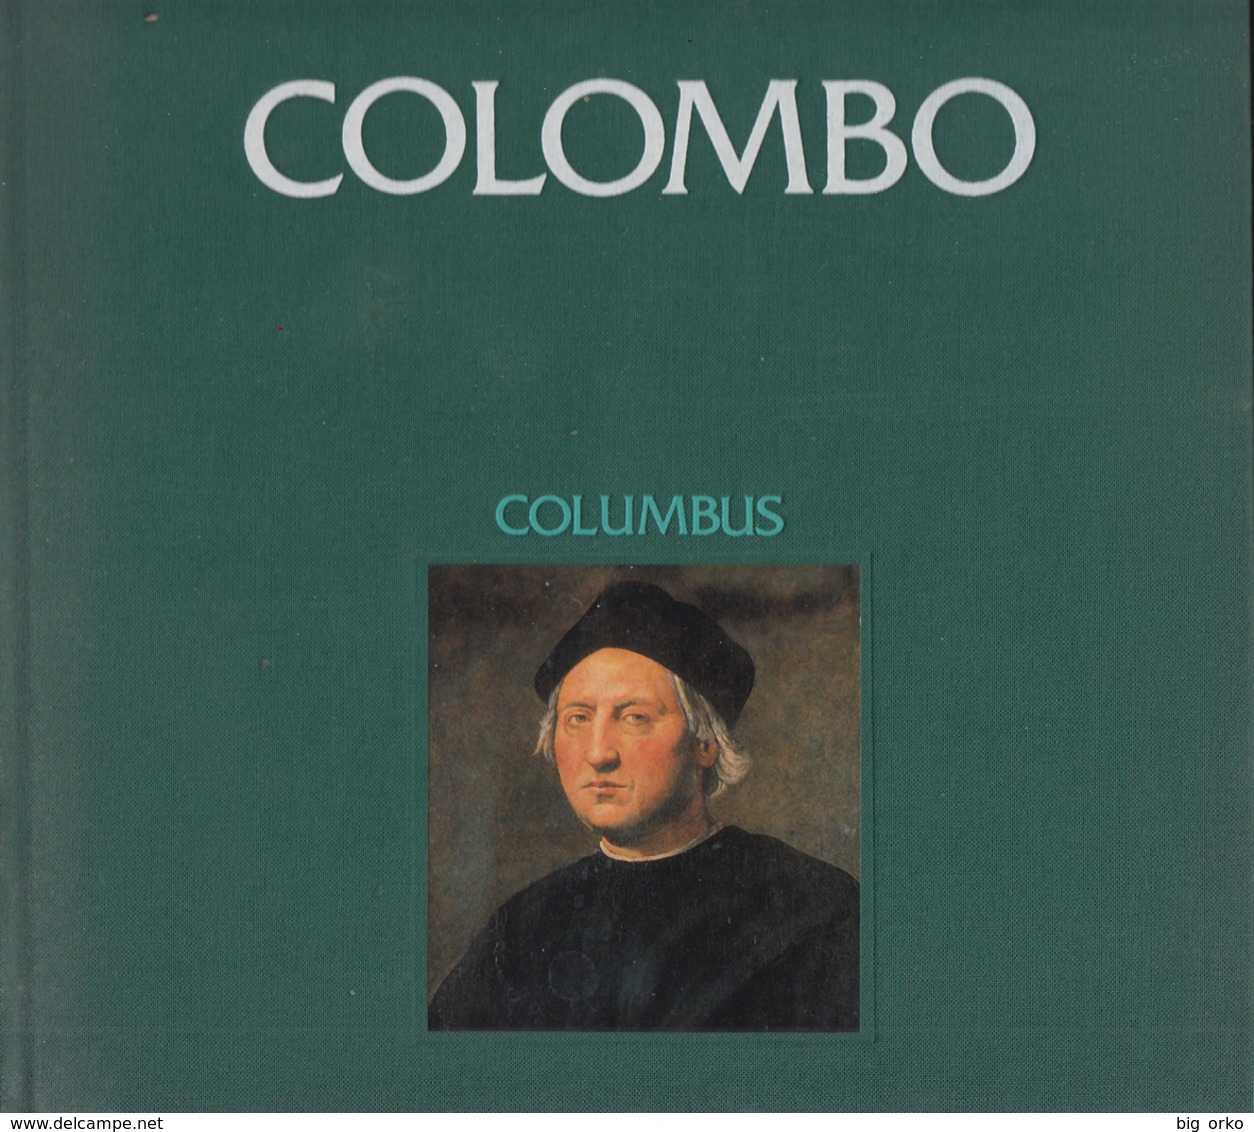 COLOMBO Di Luis Albuquerque (cm.24xcm.24) Inglese E Portoghese (copie Numerate) - Travel